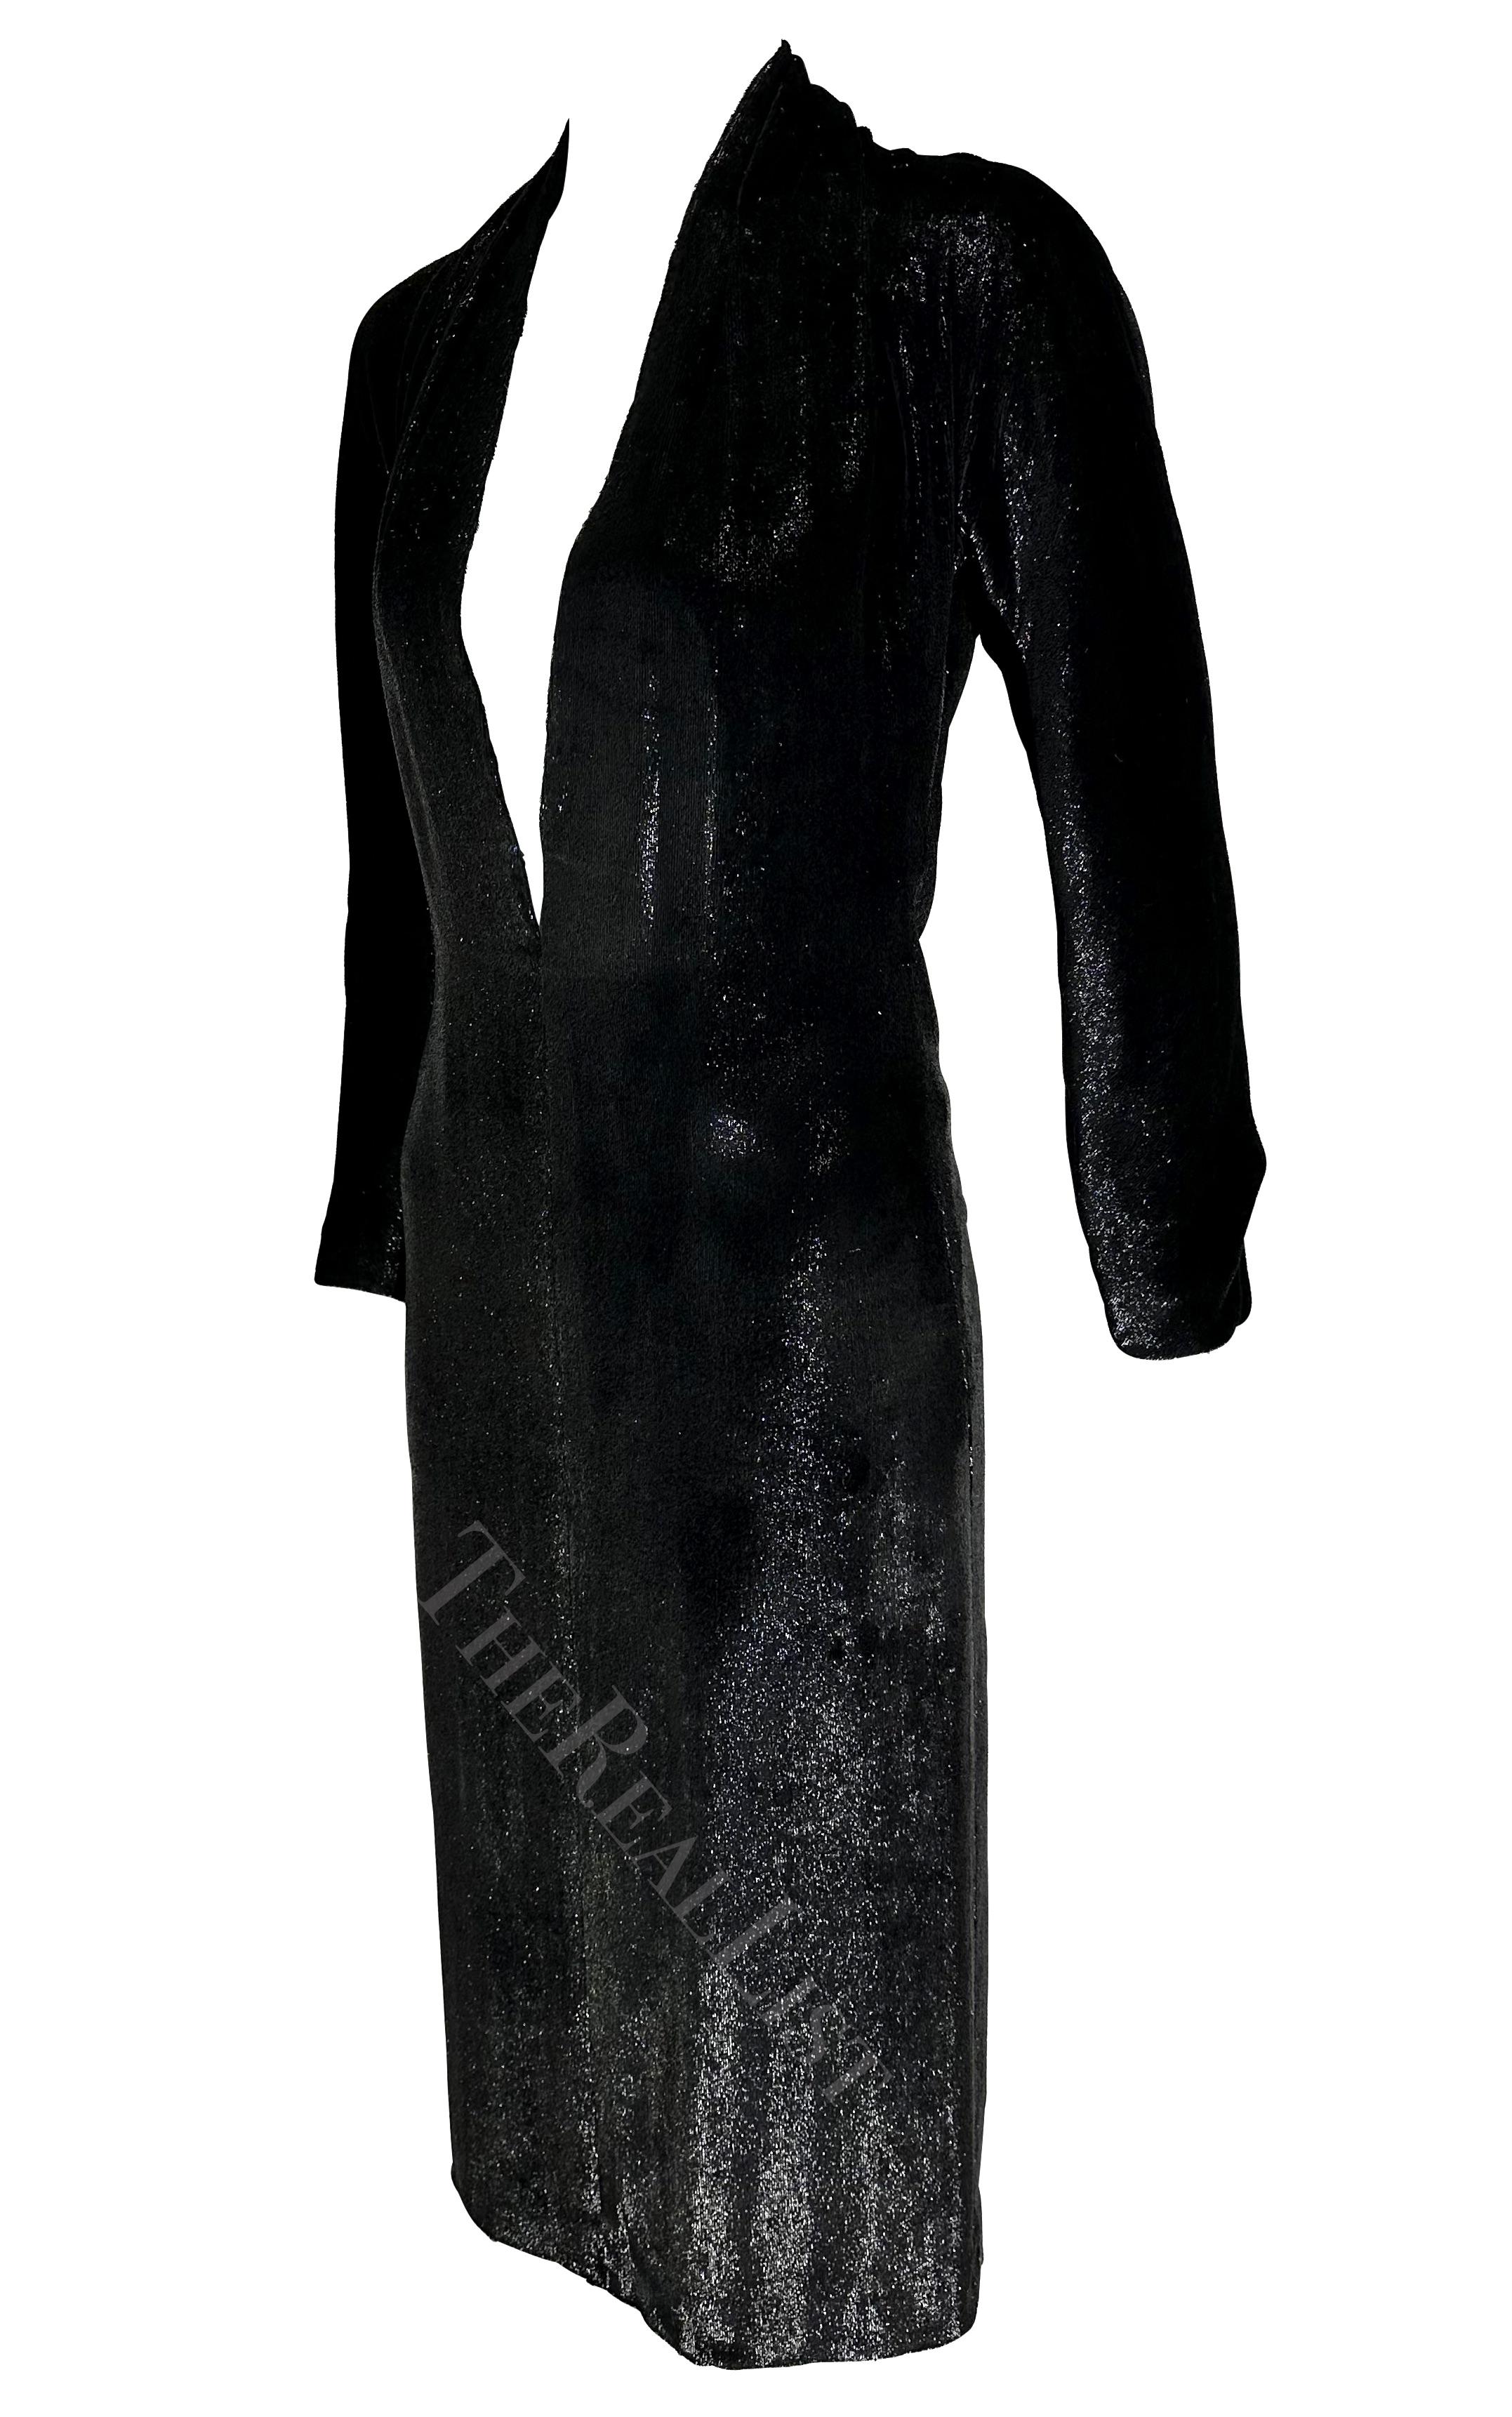 Women's F/W 2000 Yves Saint Laurent by Alber Elbaz Black Sparkle Plunging Runway Dress For Sale